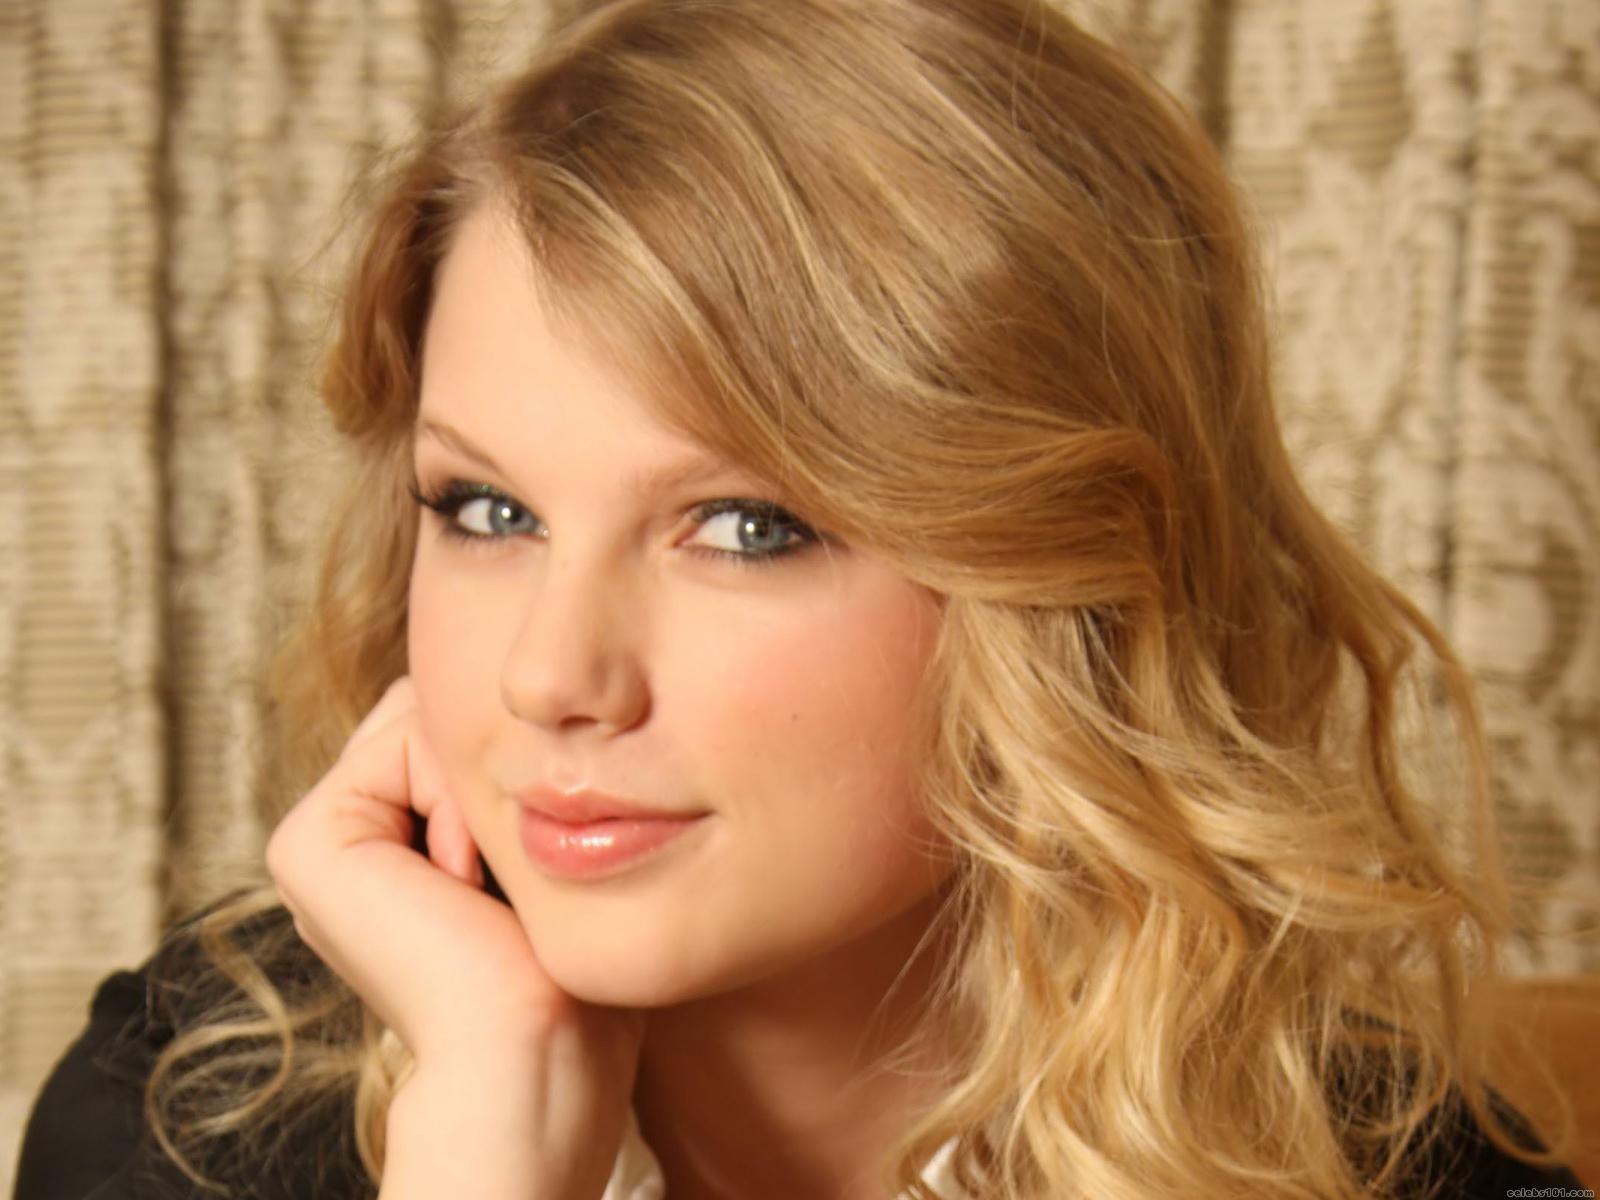 Beautiful Eyes Taylor Swift Mp3 Download